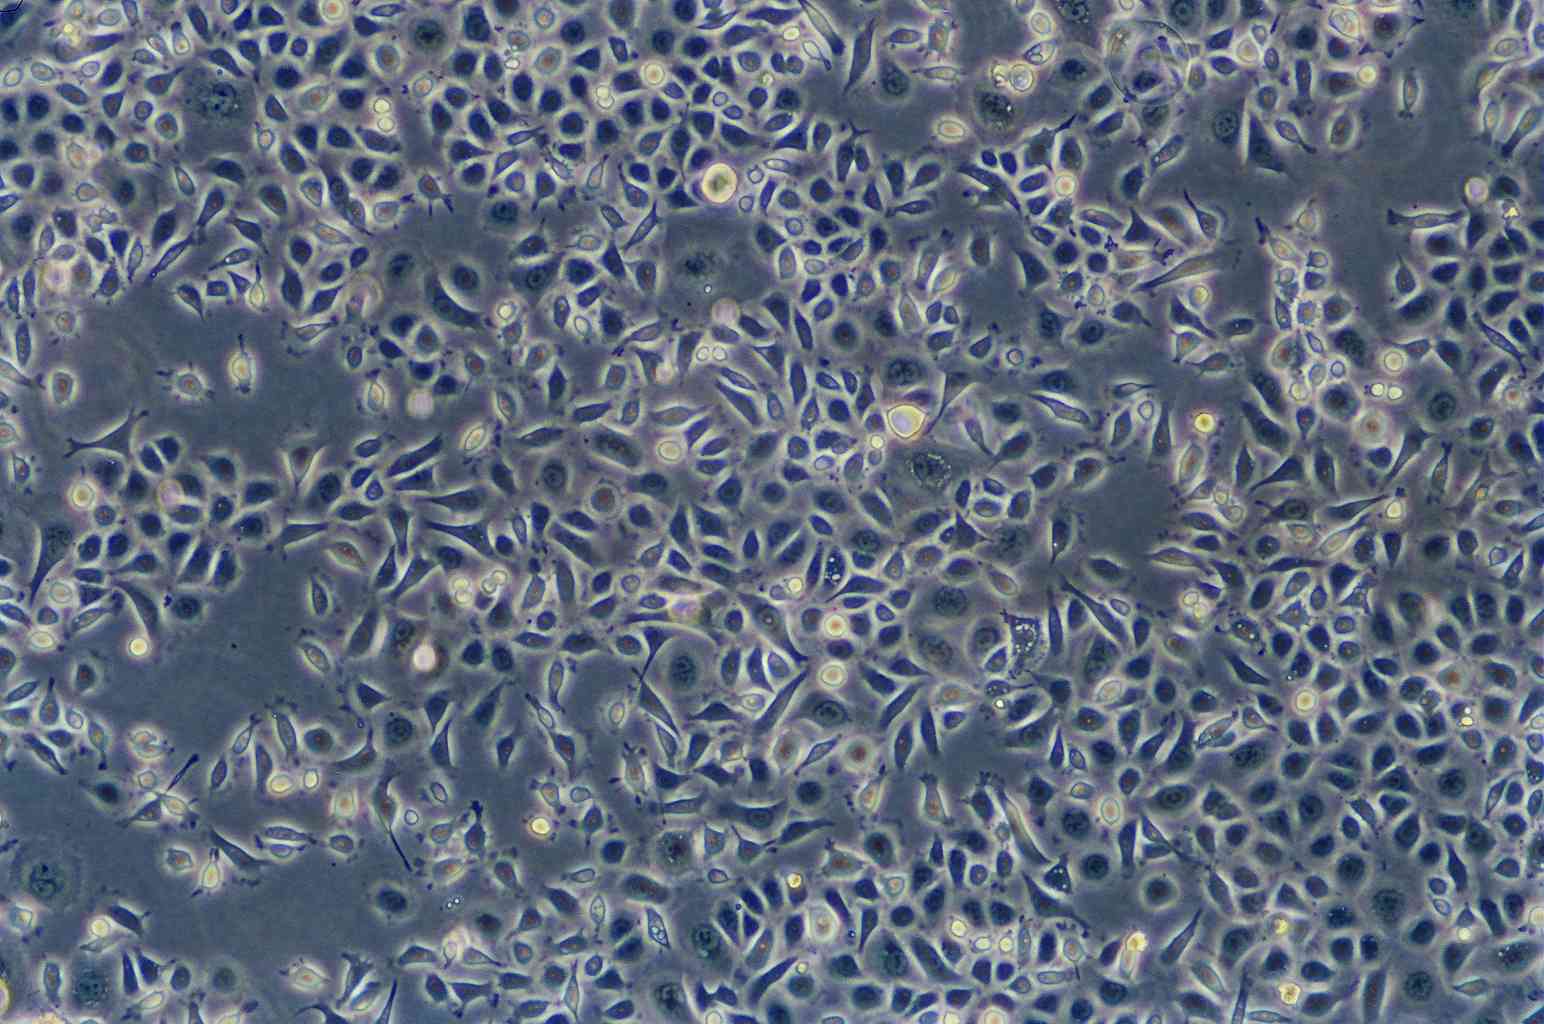 NCI-H1781 epithelioid cells人支气管肺泡腺癌细胞系,NCI-H1781 epithelioid cells